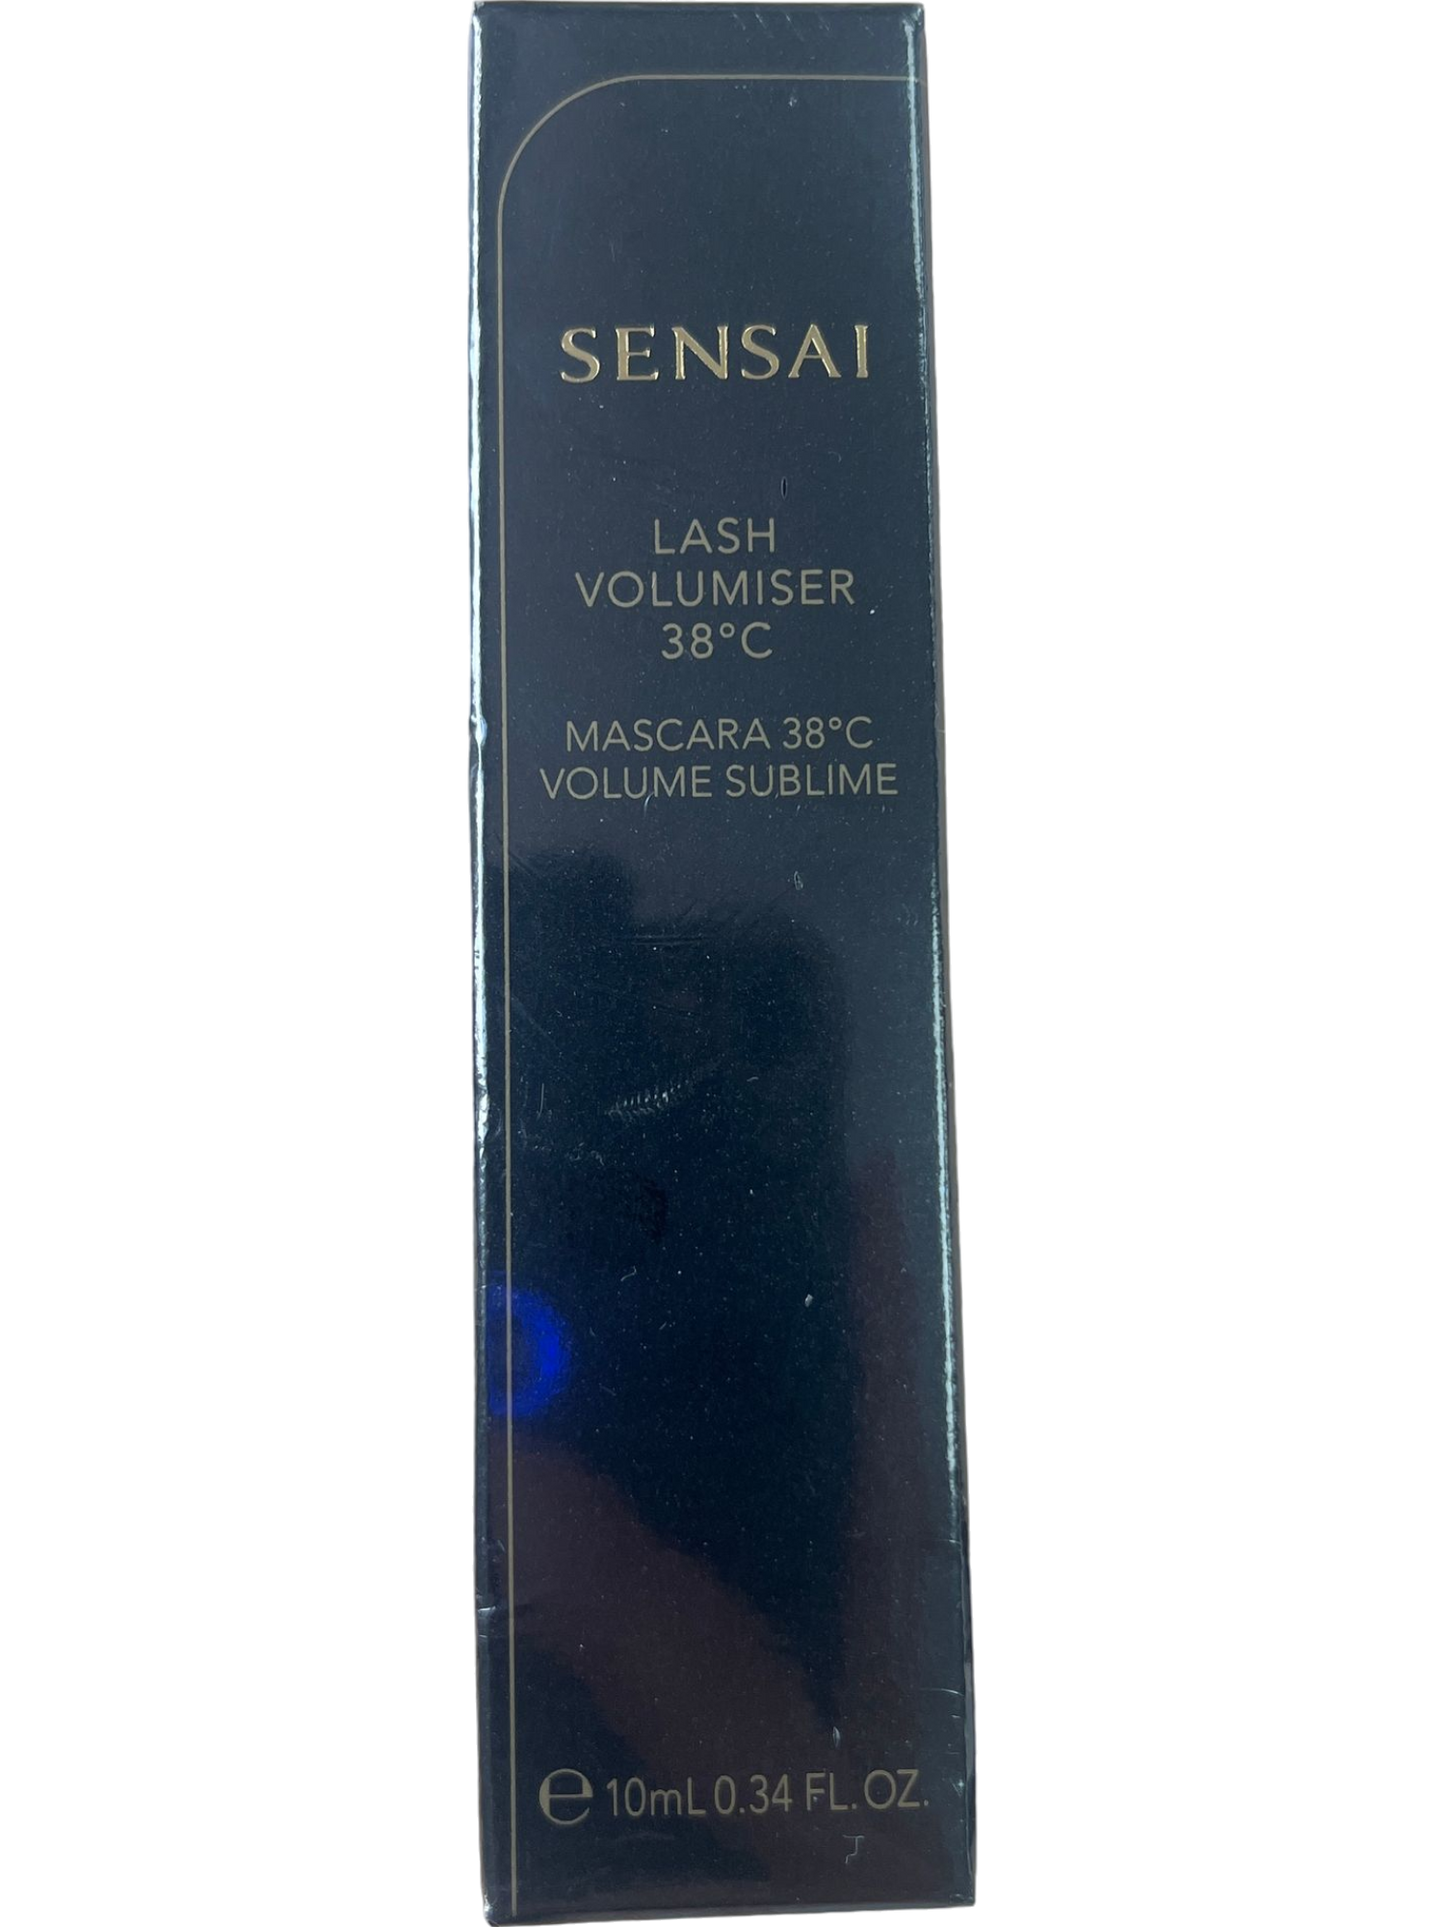 SENSAI Lash Volumiser 38C Mascara Black Volume Sublime BNIB 10ml